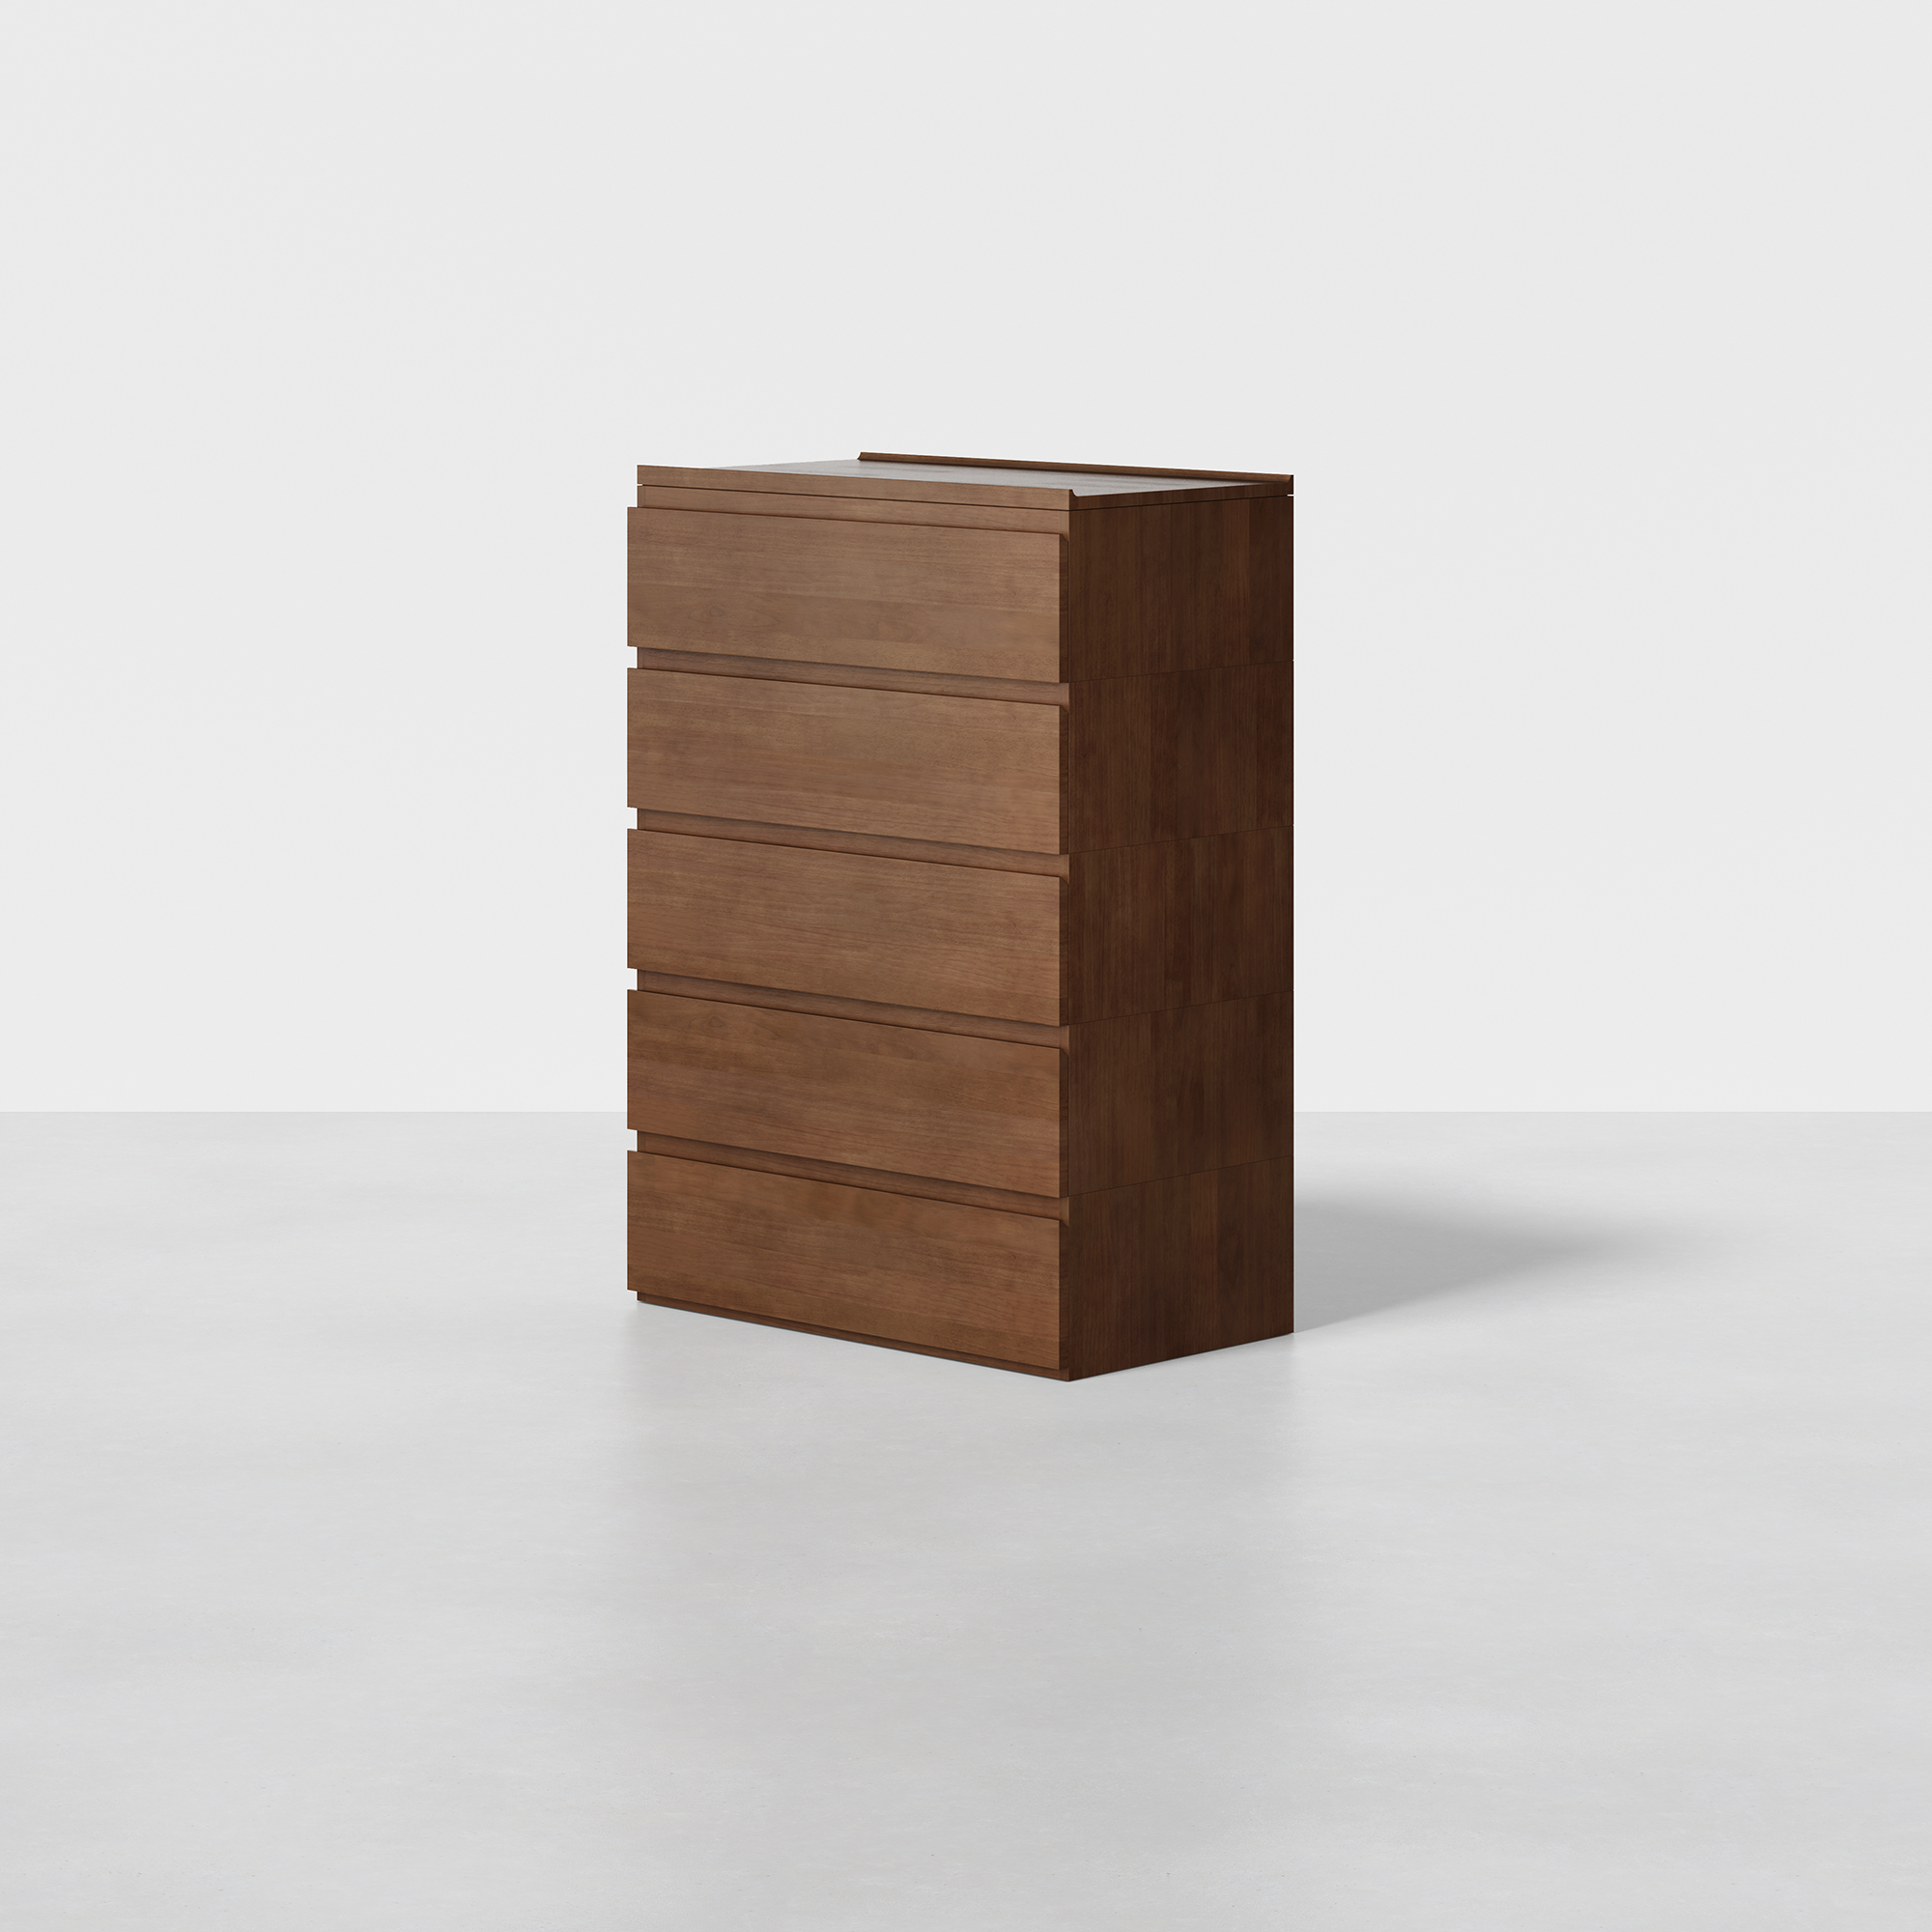 PDP Image: The Dresser (5x1 - Walnut) - Render - Angled